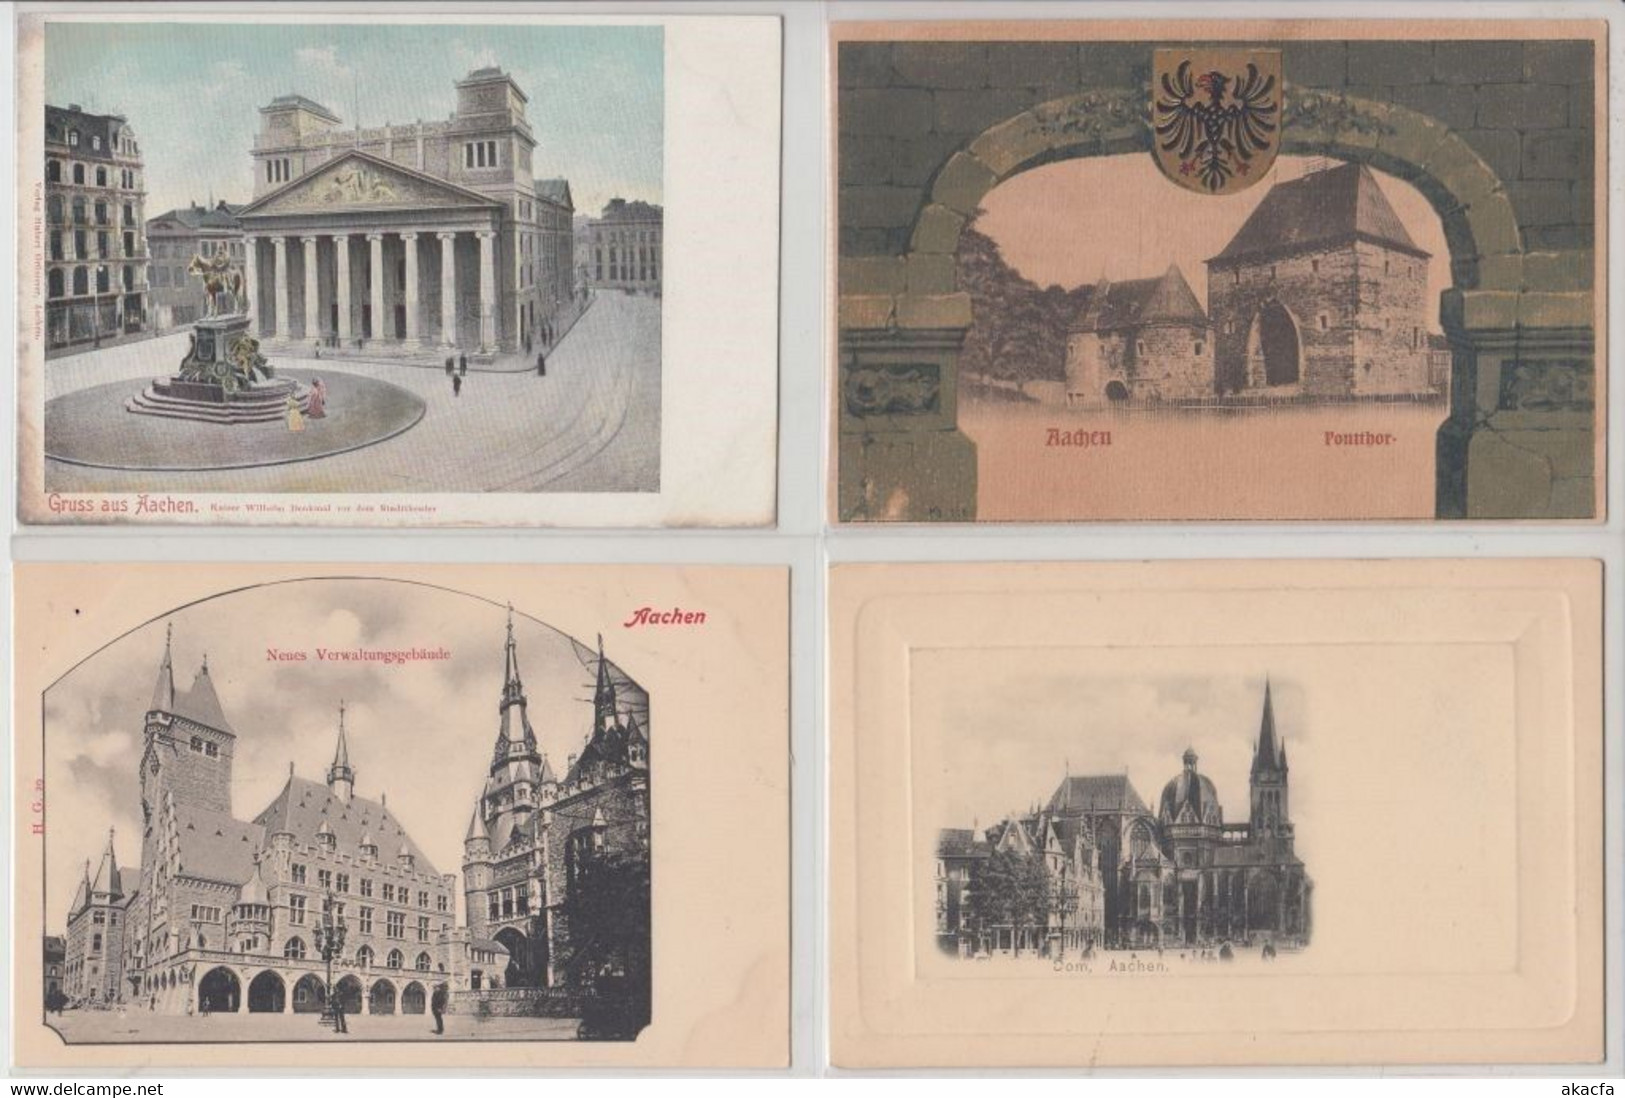 AACHEN AKEN Germany 63 Vintage Postcards pre-1940 (L5350)